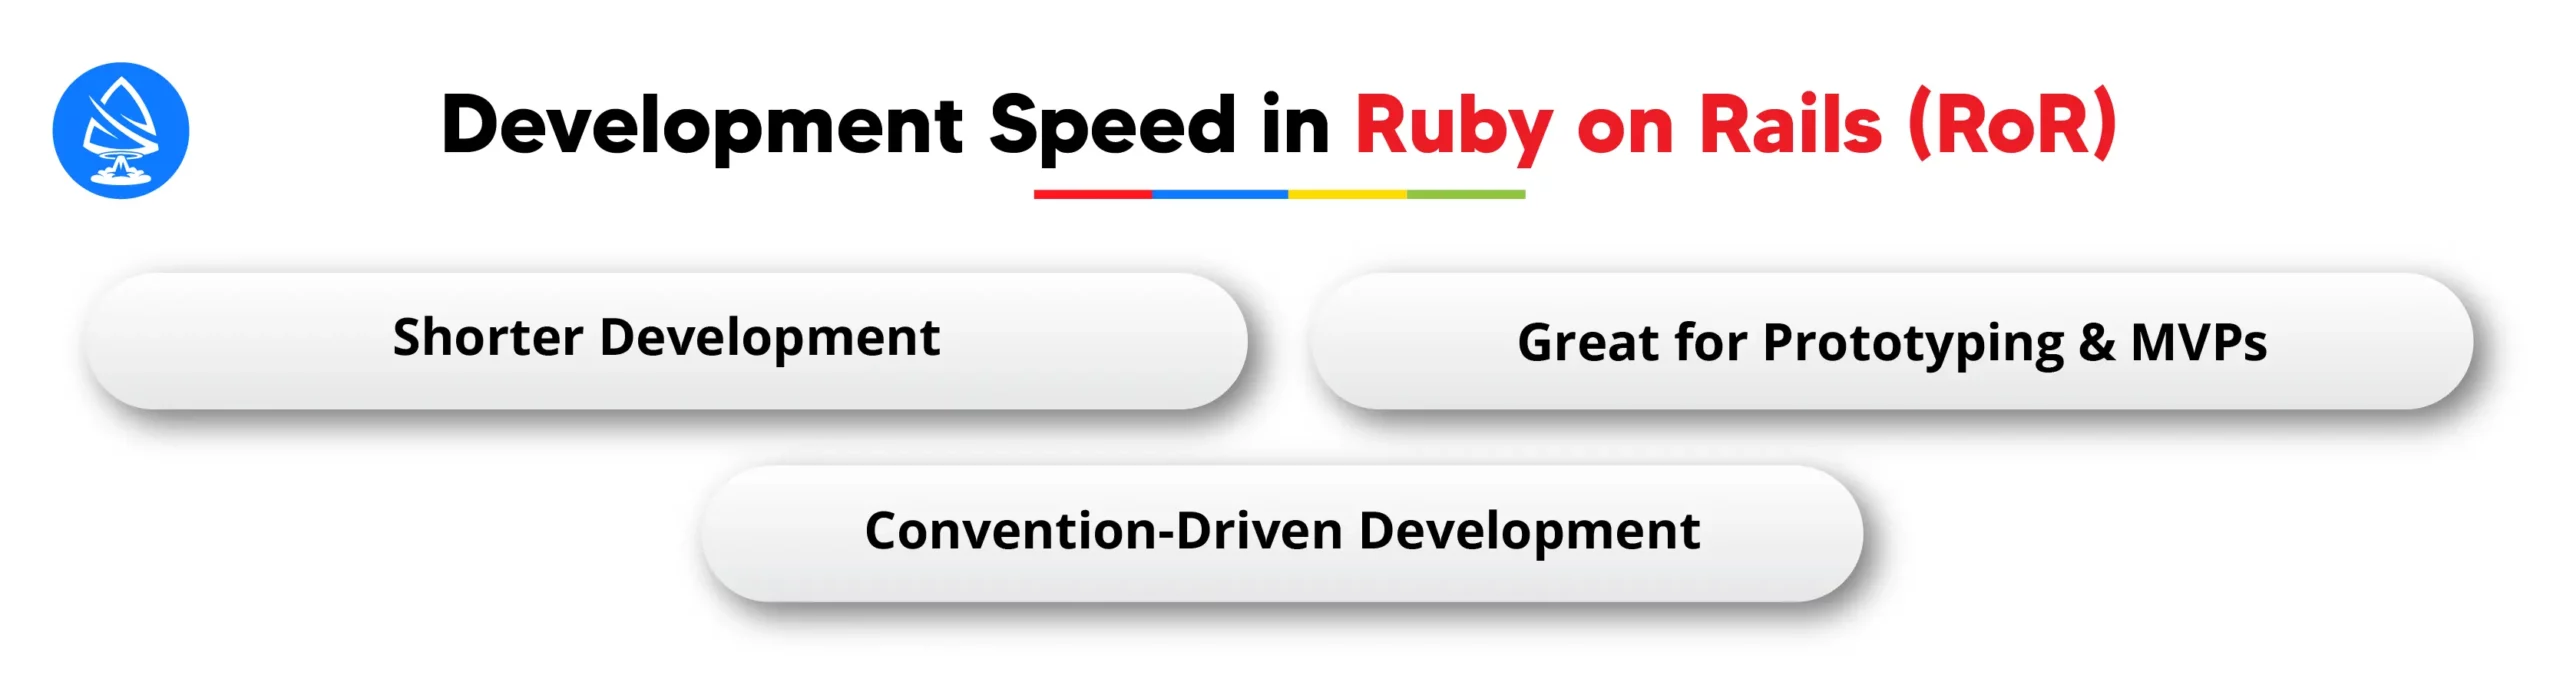 Development Speed in Ruby on Rails (RoR) 